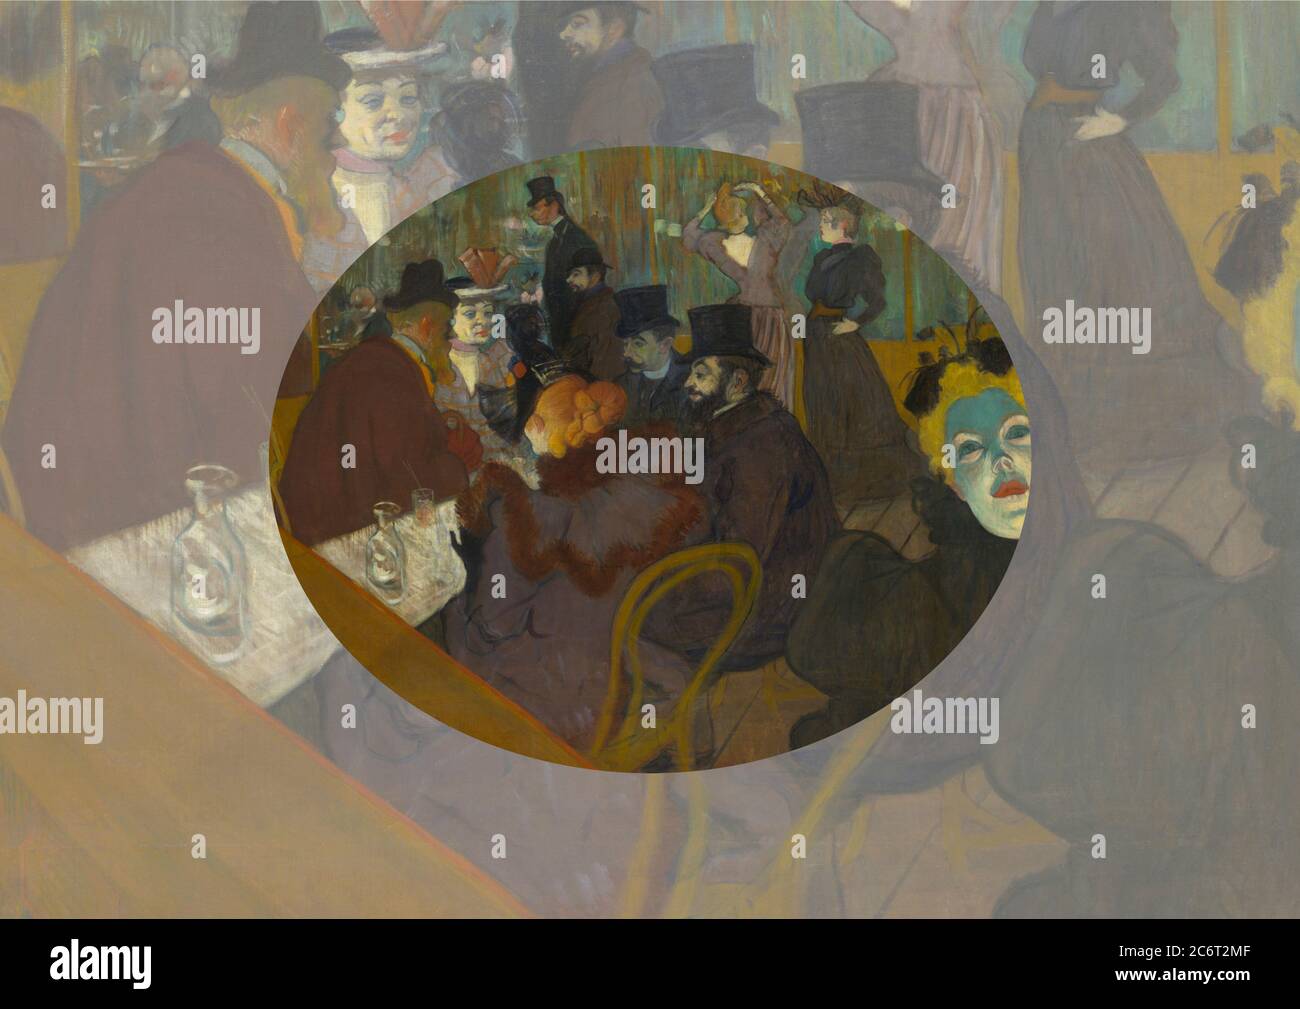 Toulouse Lautrec inspired artwork Stock Photo